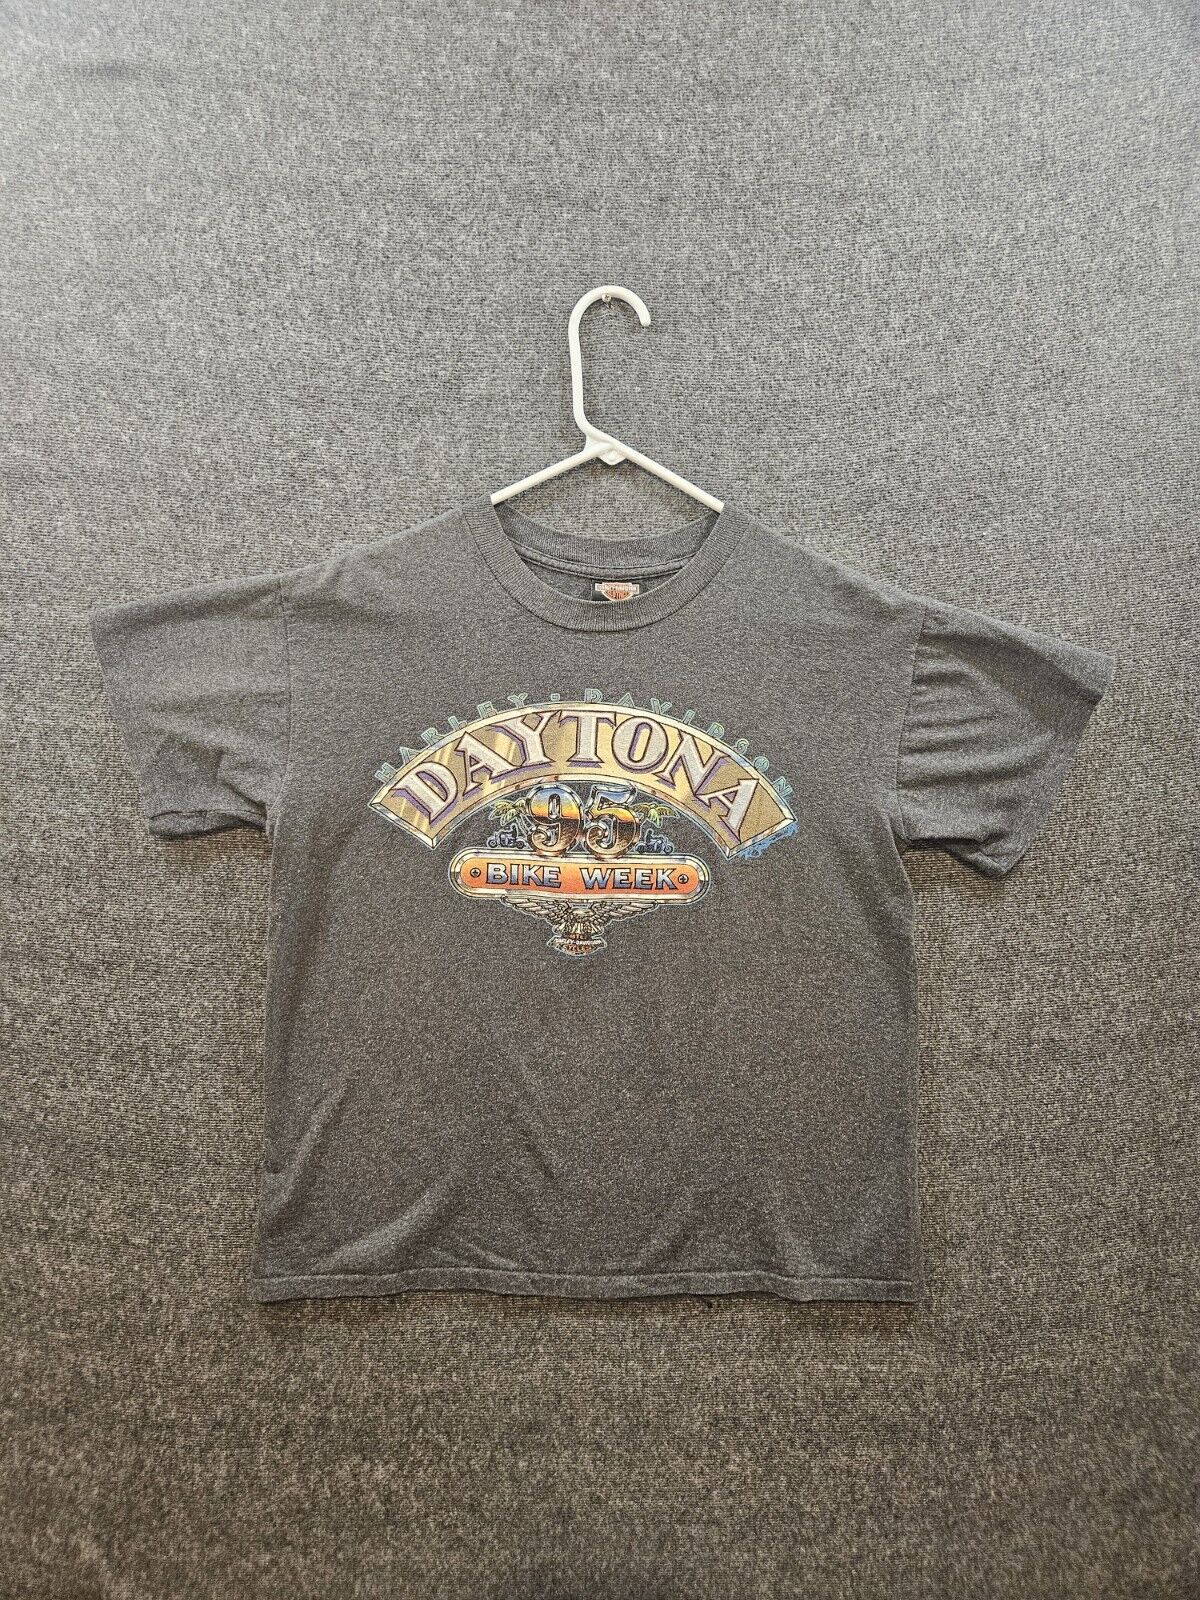 VTG 1995 Bike Week Gray Harley-Davidson T-shirt Single-Stitch USA Made MEDIUM